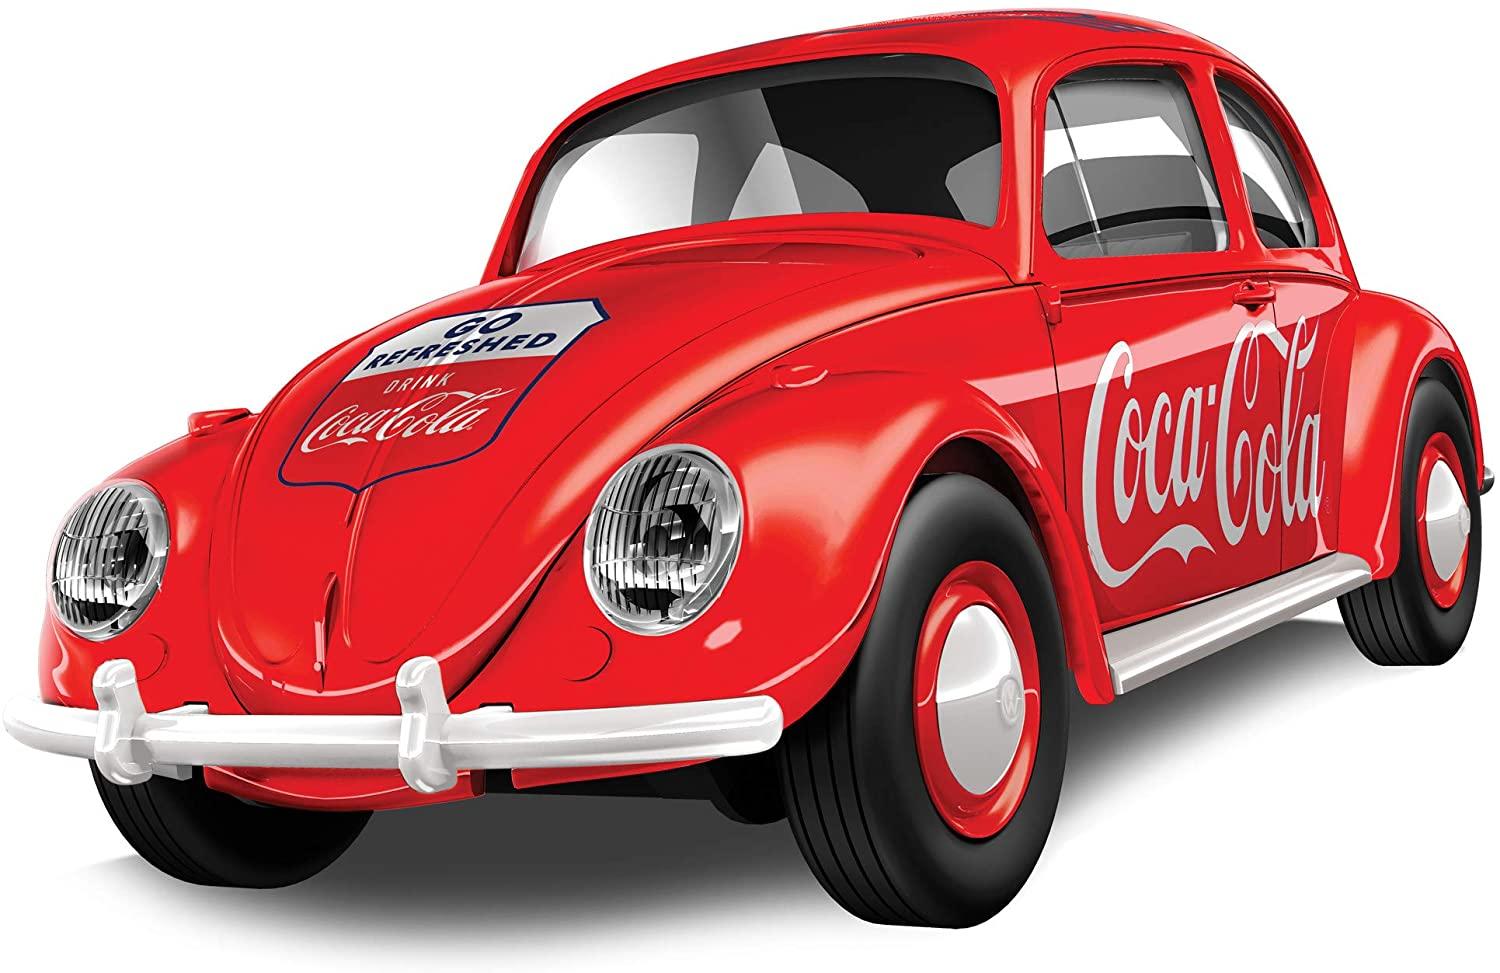 Vintage-look red model Beetle car with Coca-cola branding.